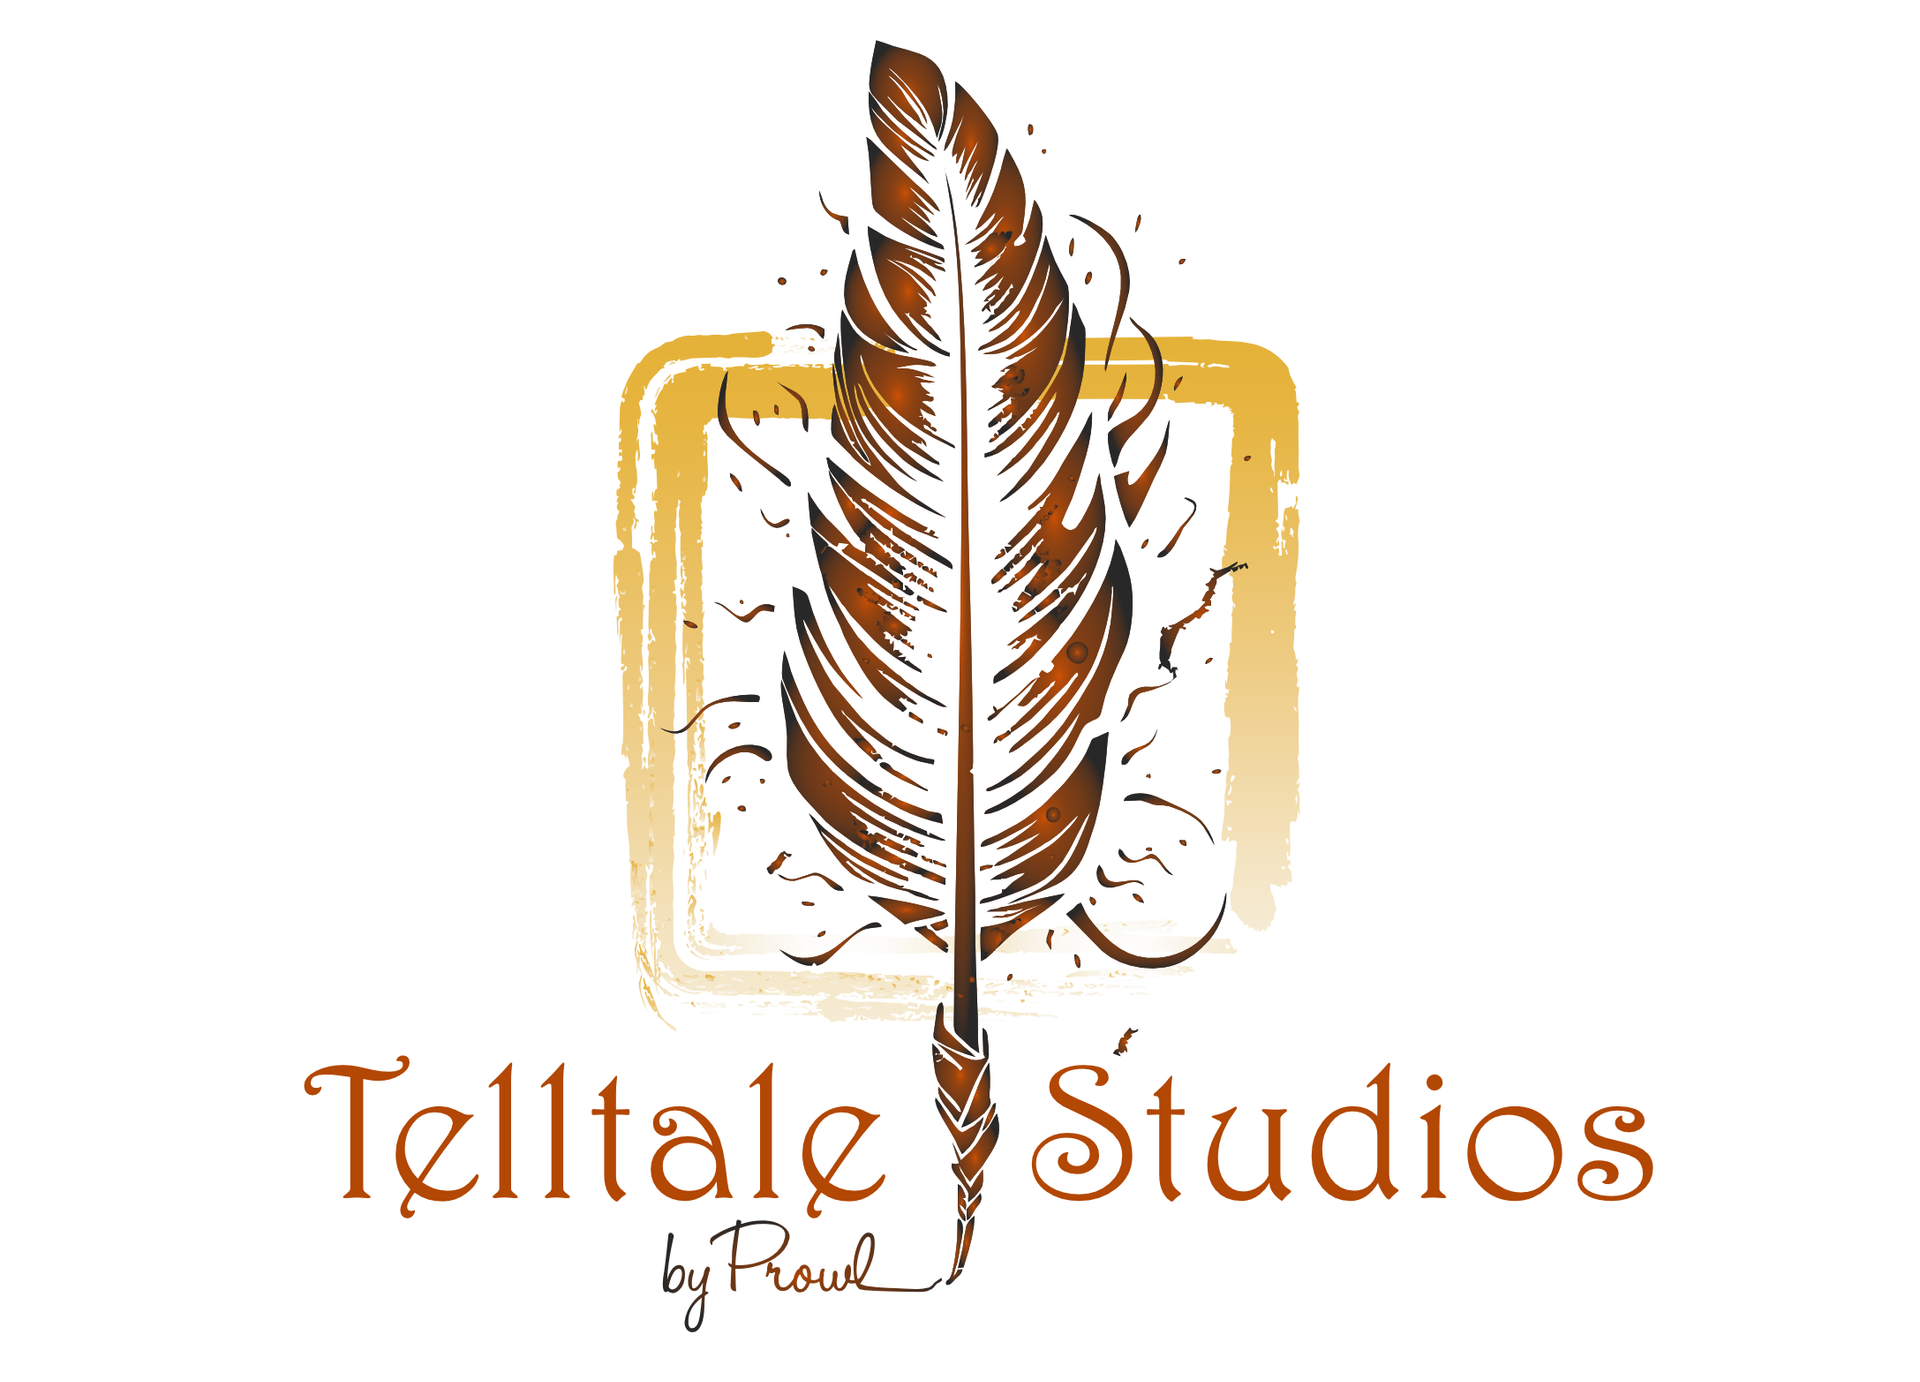 telltale studios logo